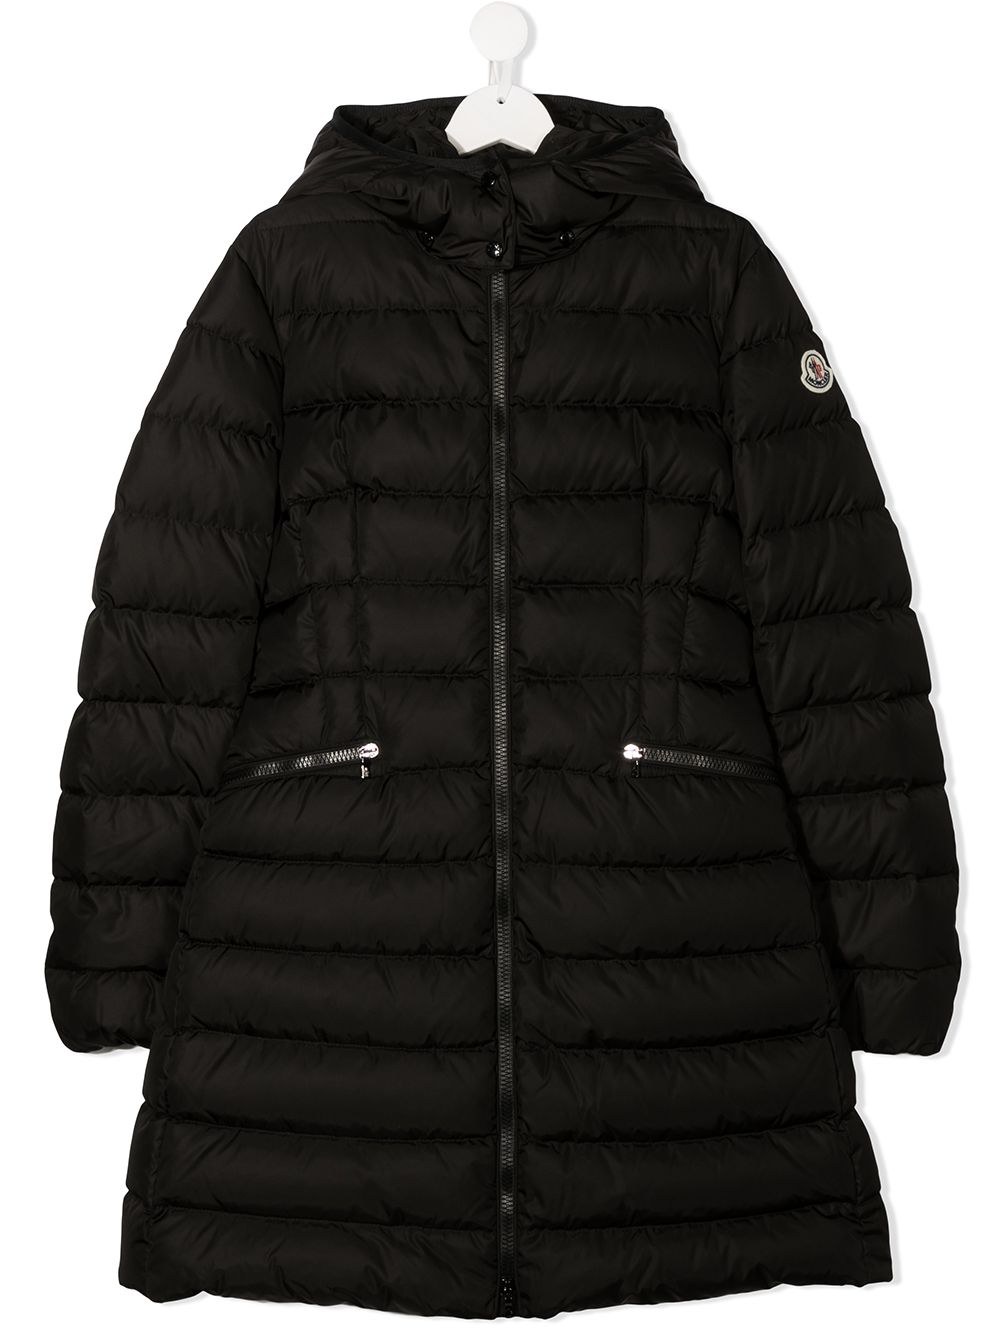 Black Charpal coat for girls